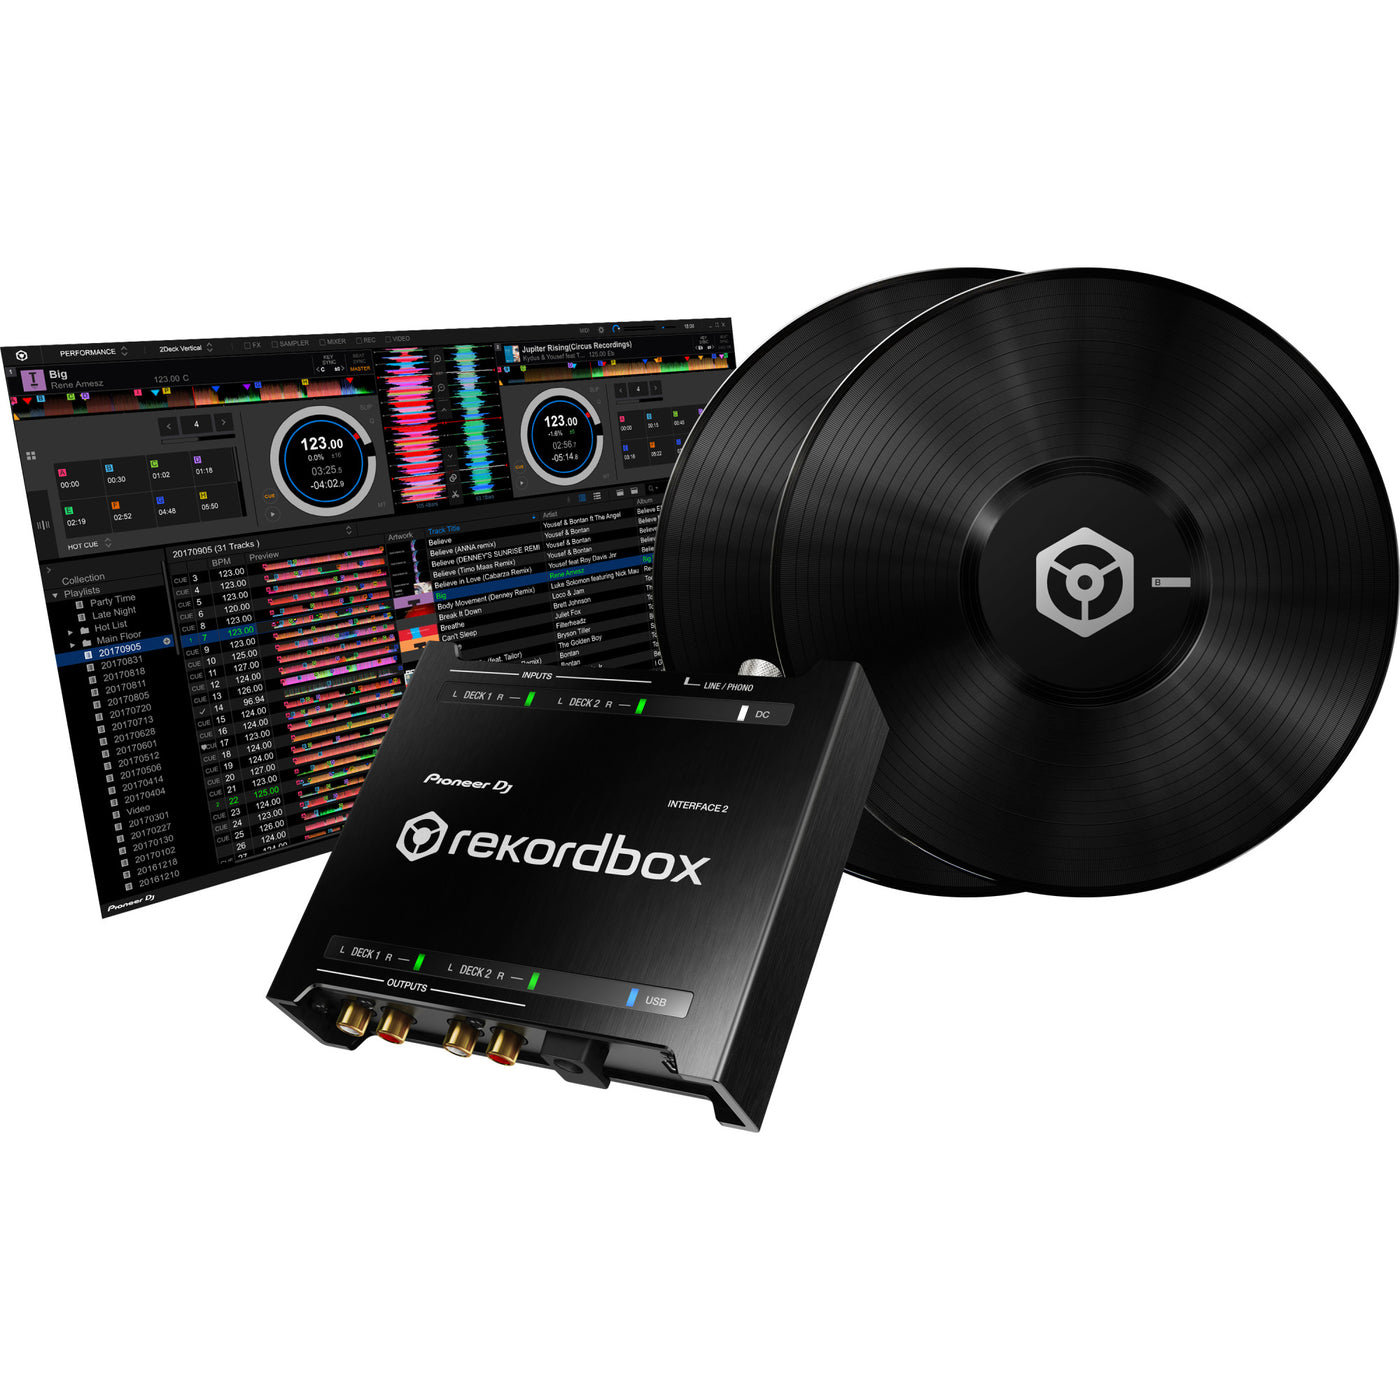 Pioneer DJ INTERFACE2 2-Channel Audio Interface for Rekordbox DVS,  Professional DJ Equipment, Control Audio DJ Set from Booth